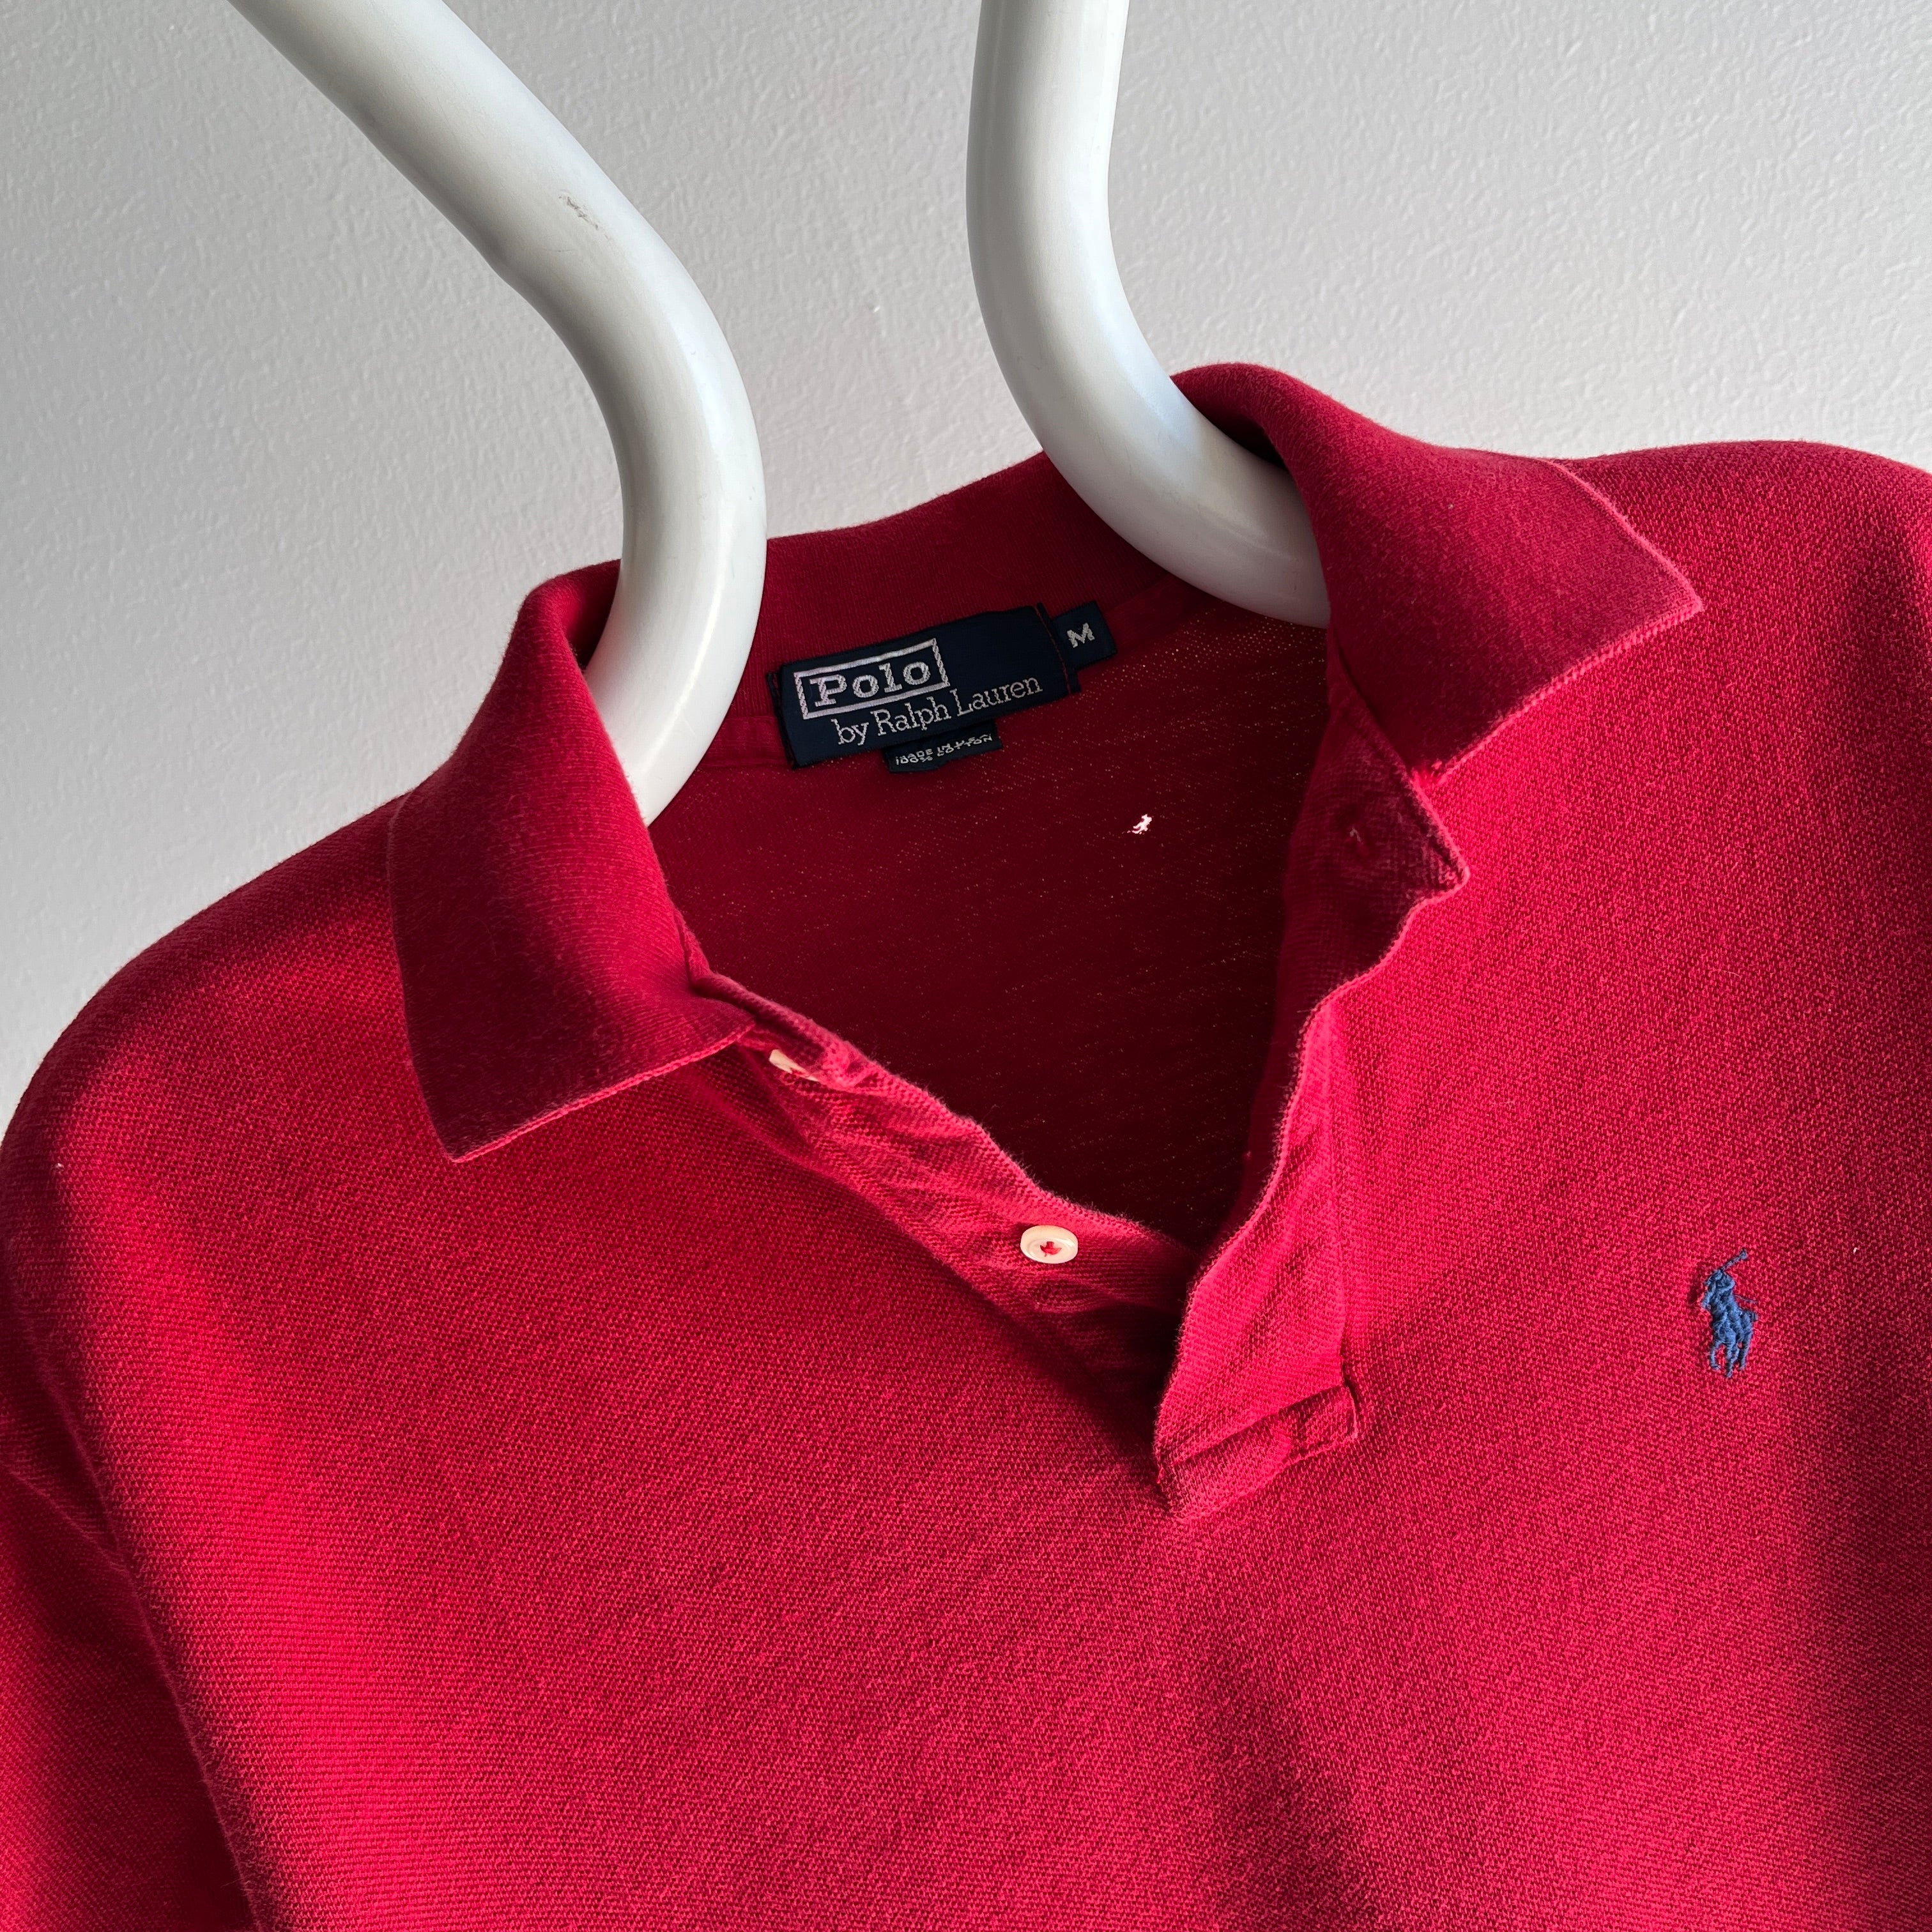 1980s USA Made Ralph Lauren Polo Shirt in a Rich Red